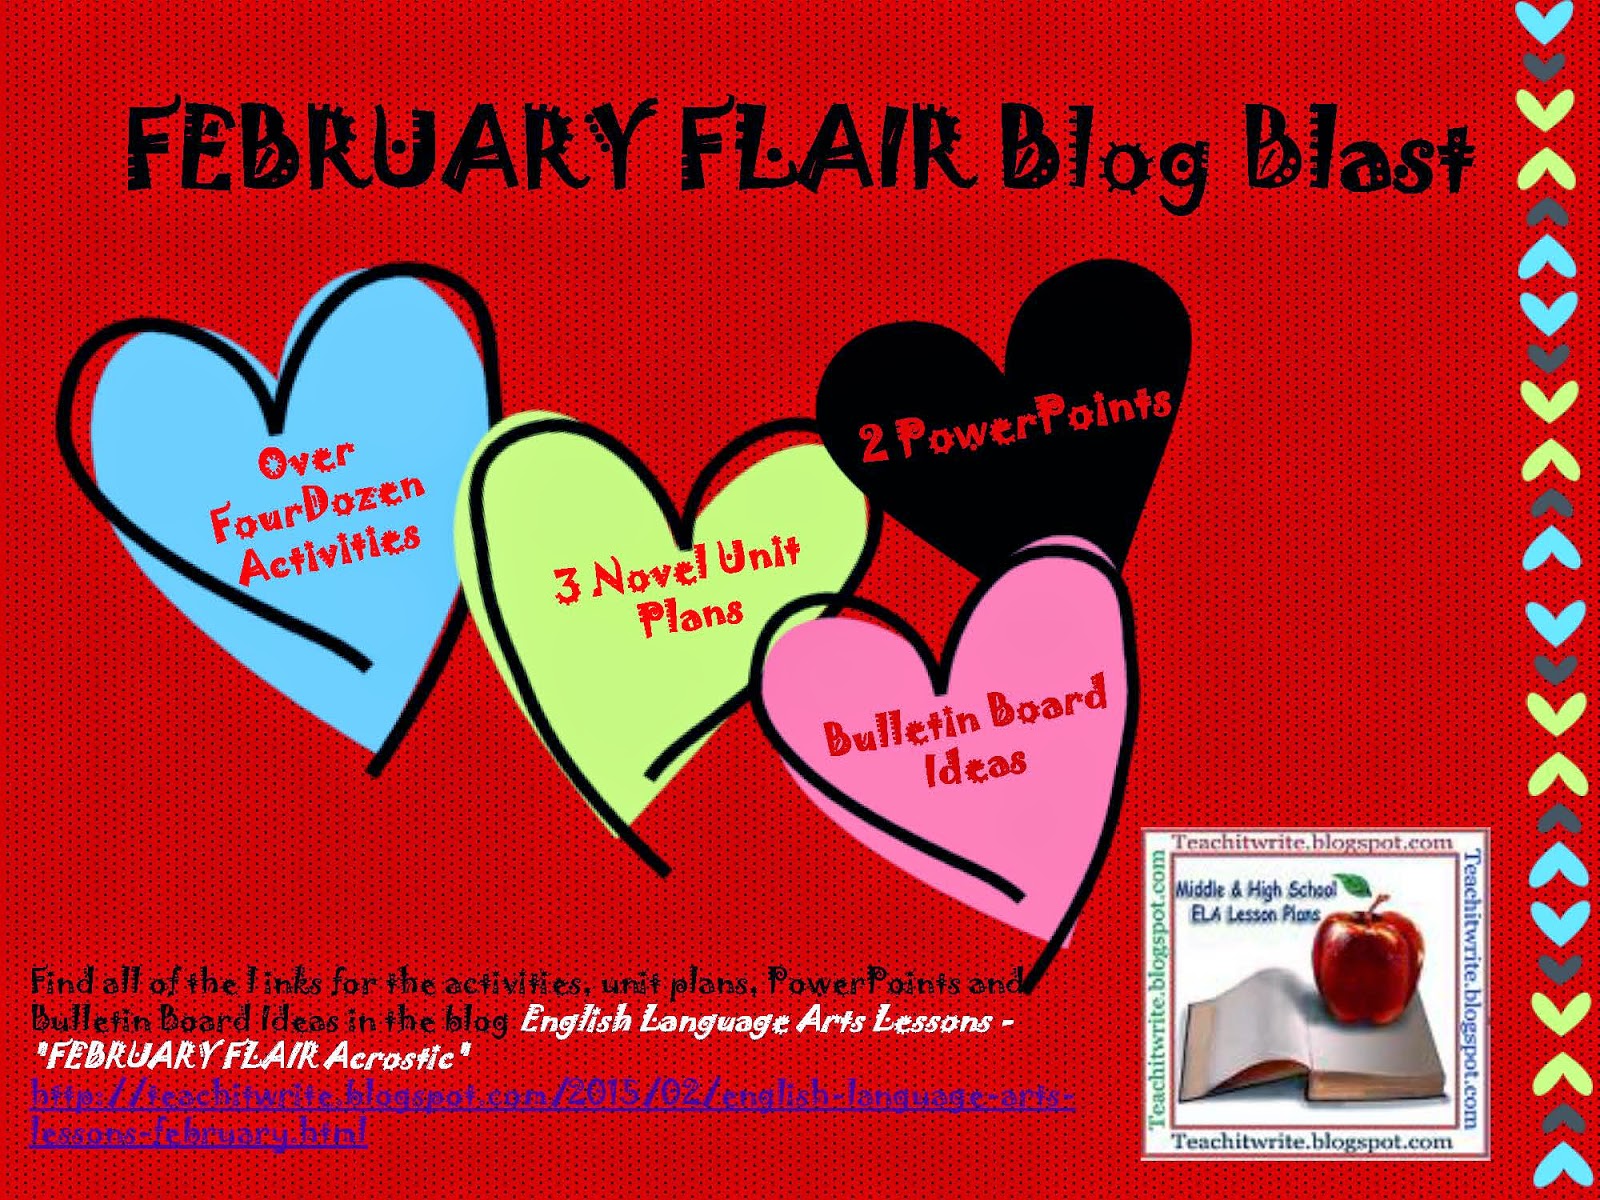 February Flair Blog Blast poster